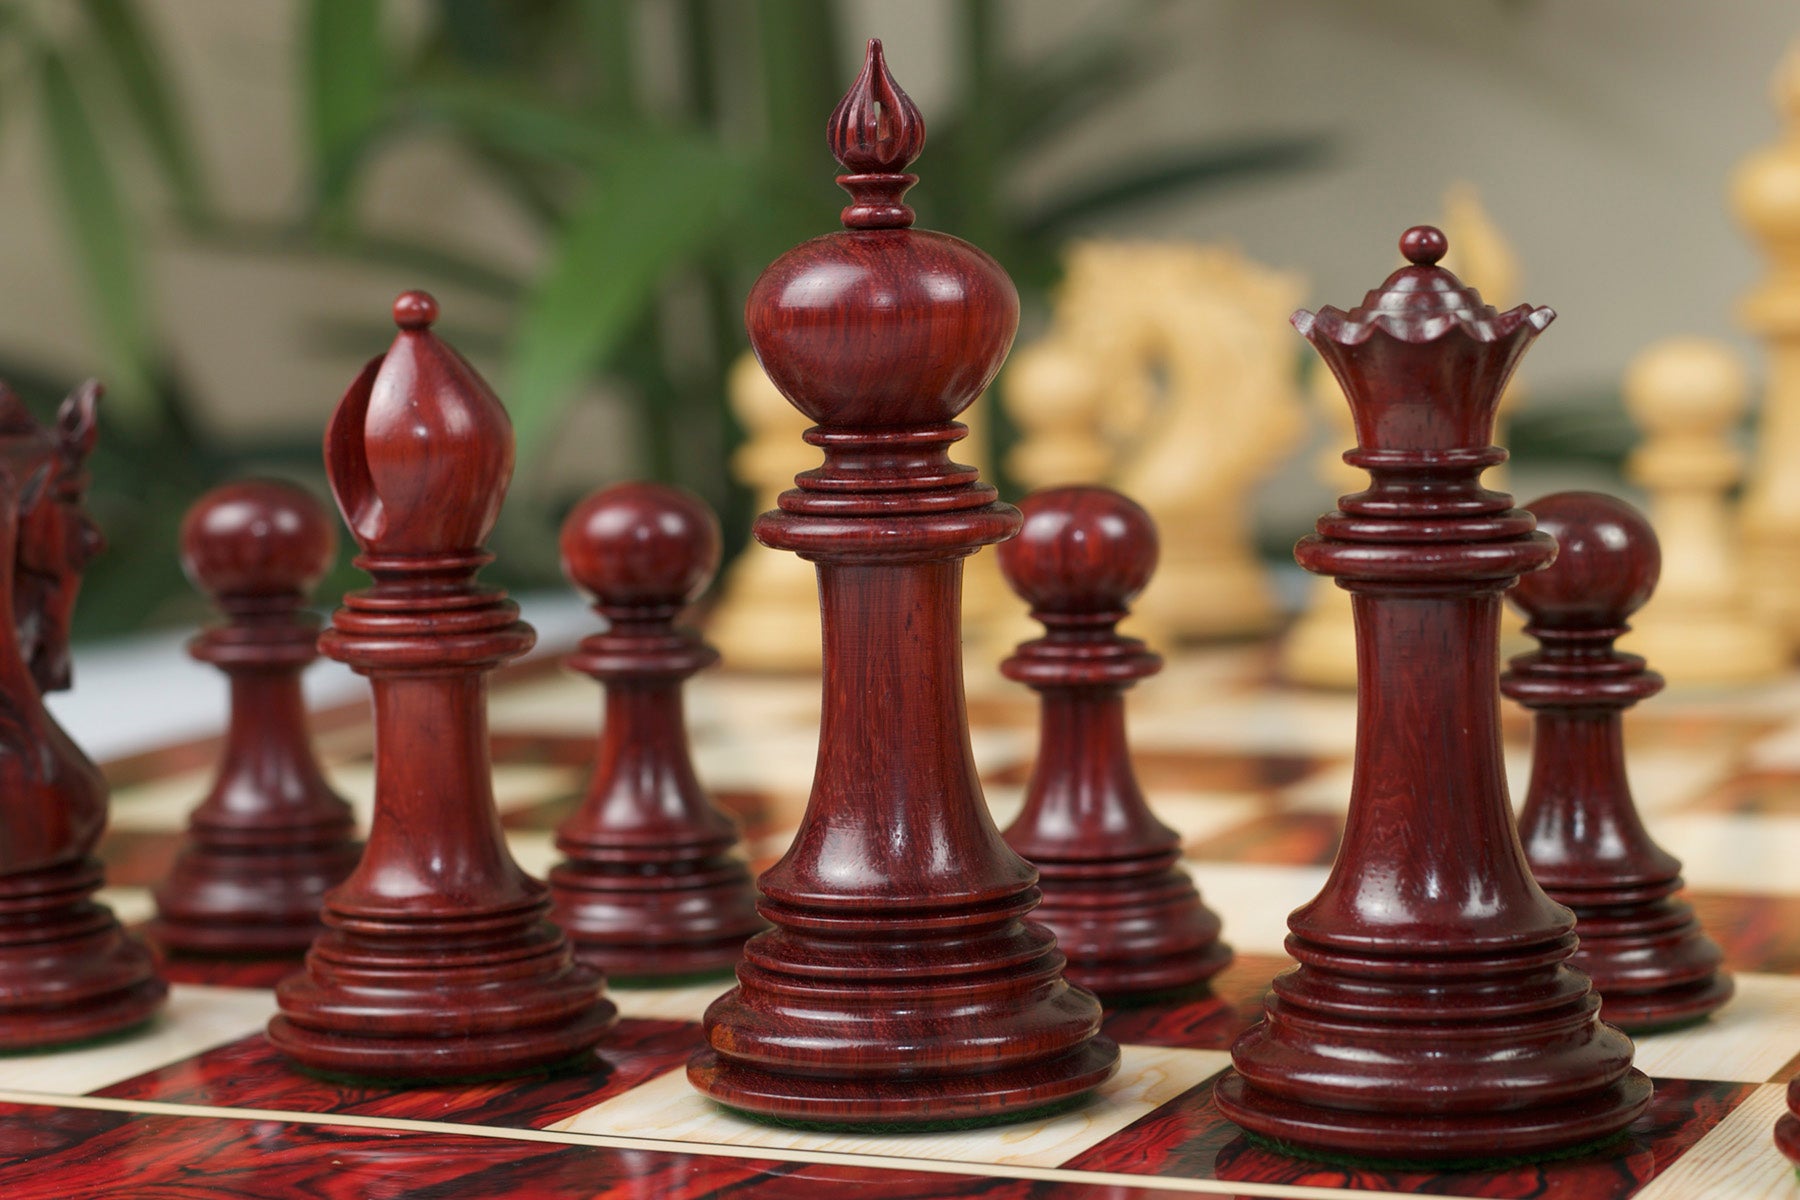 Valluzia Series 4.4" Luxury Staunton Chessmen in Blood Rose Wood and Boxwood